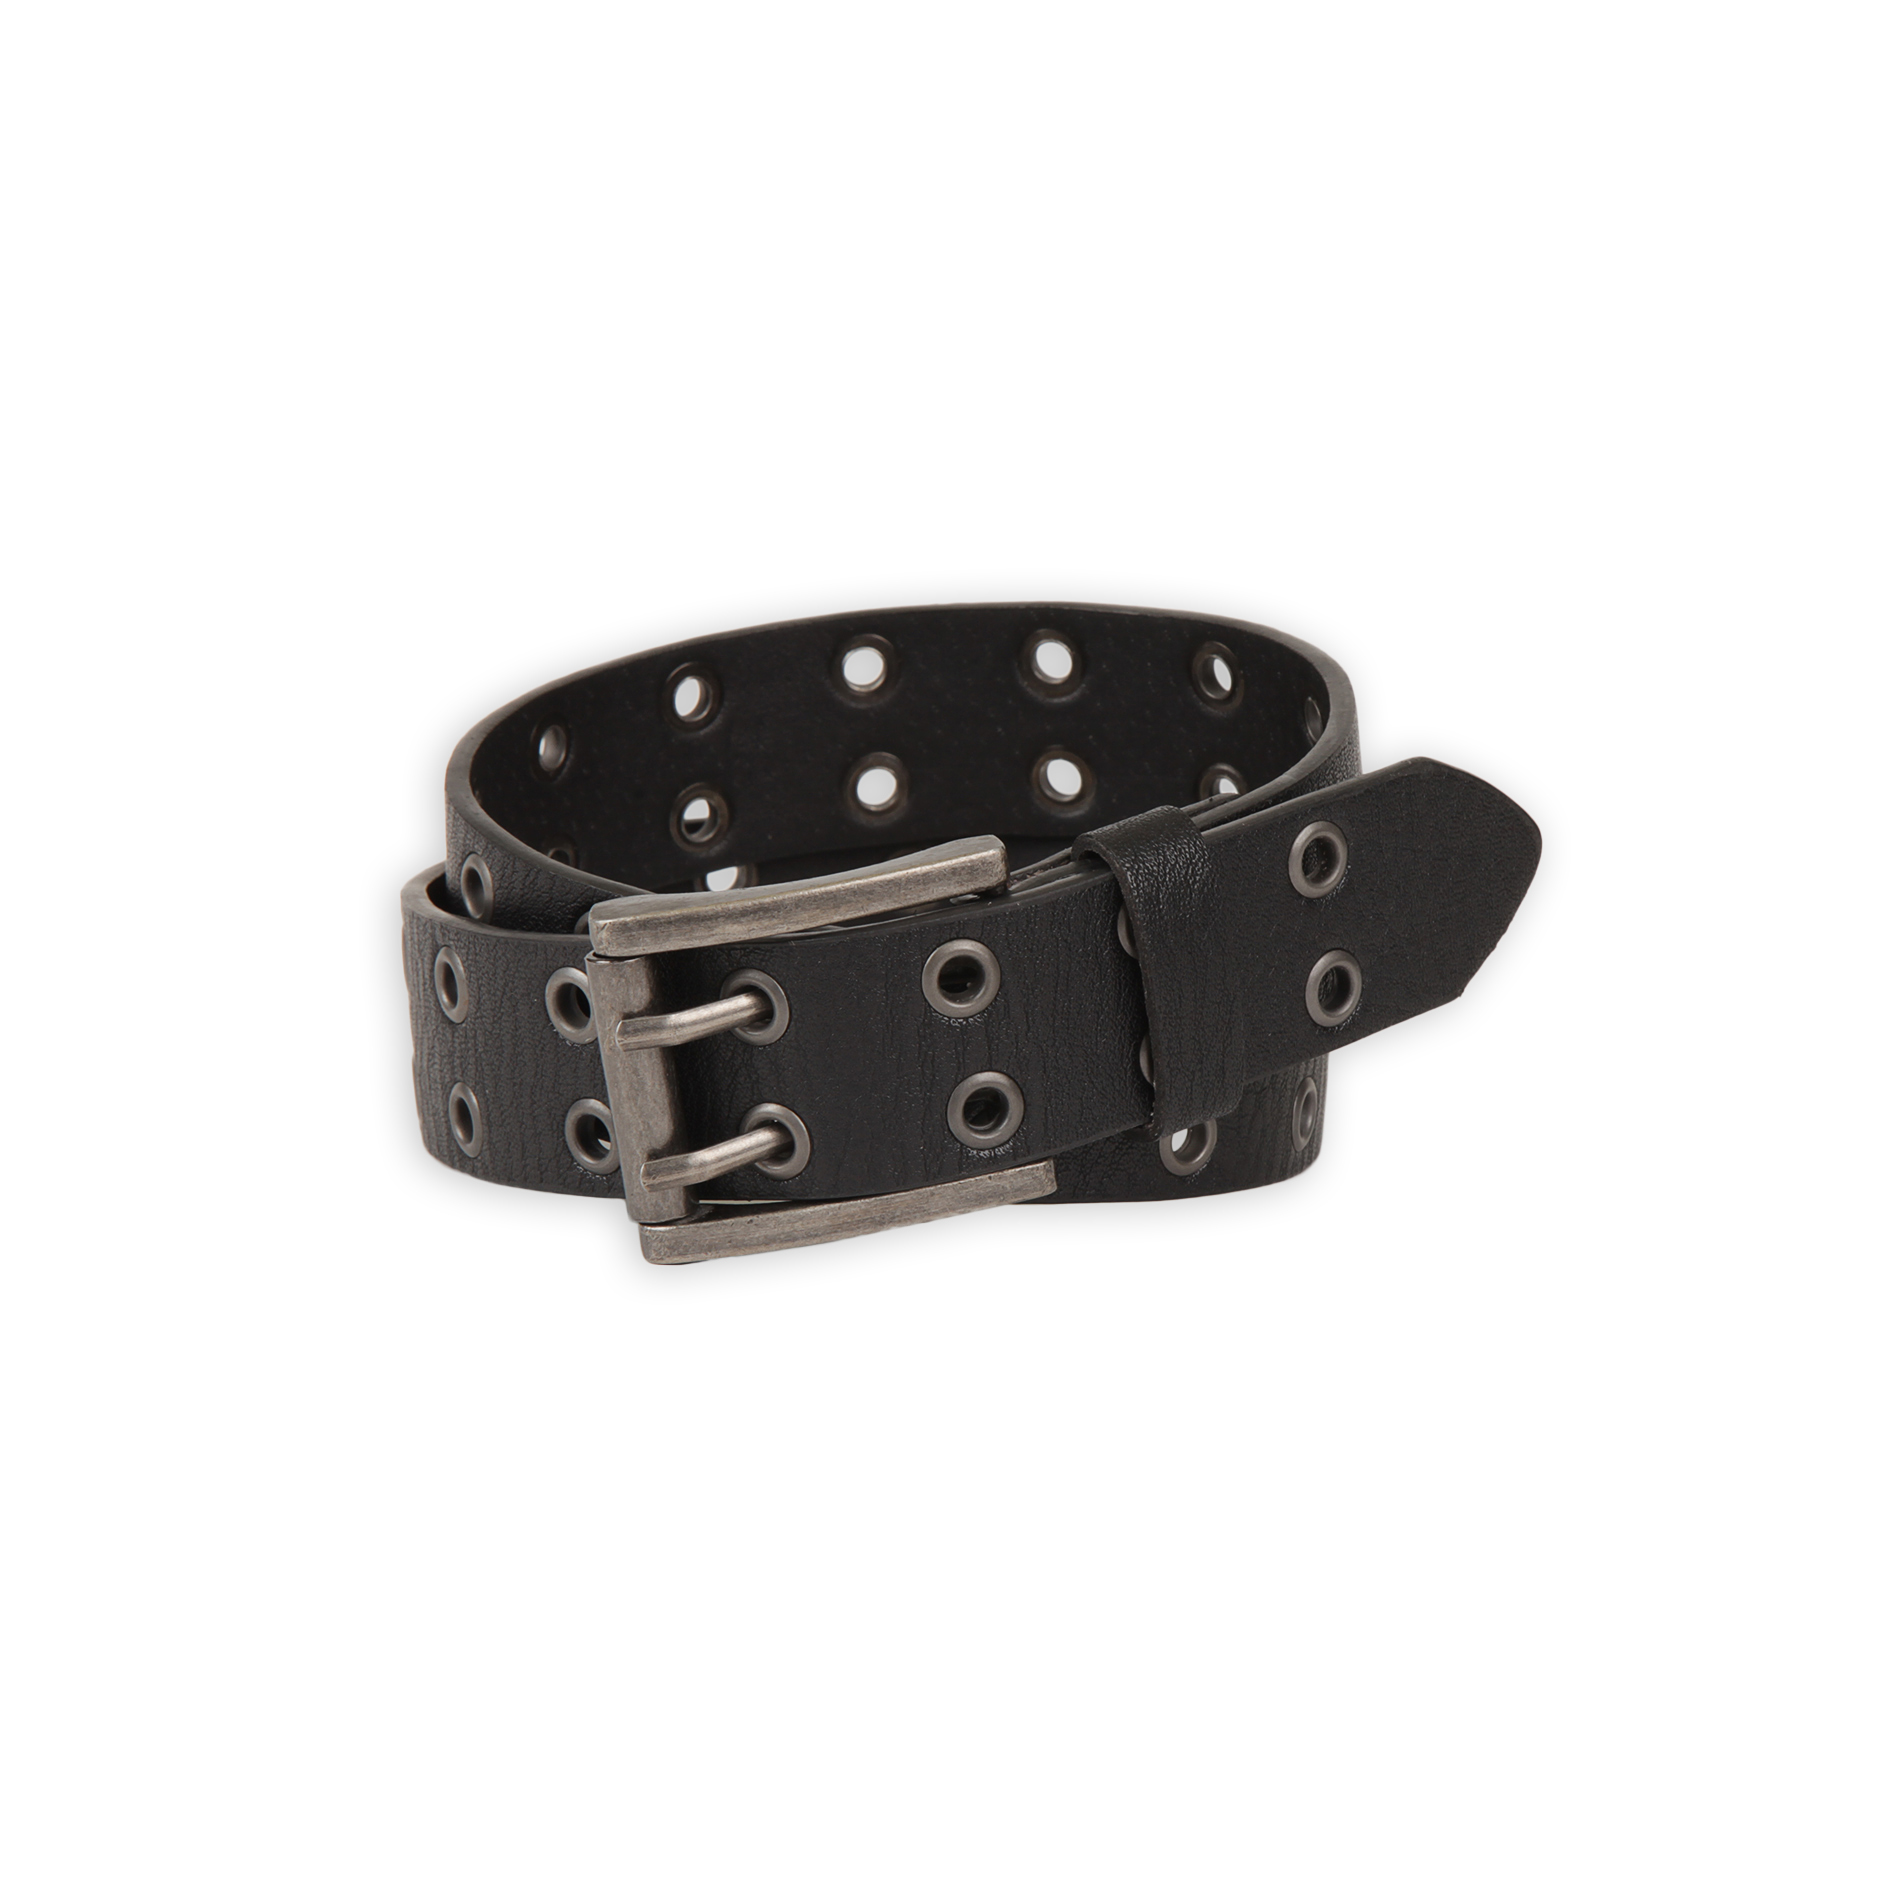 Basic Editions Boy's Leather Belt - Double Grommet